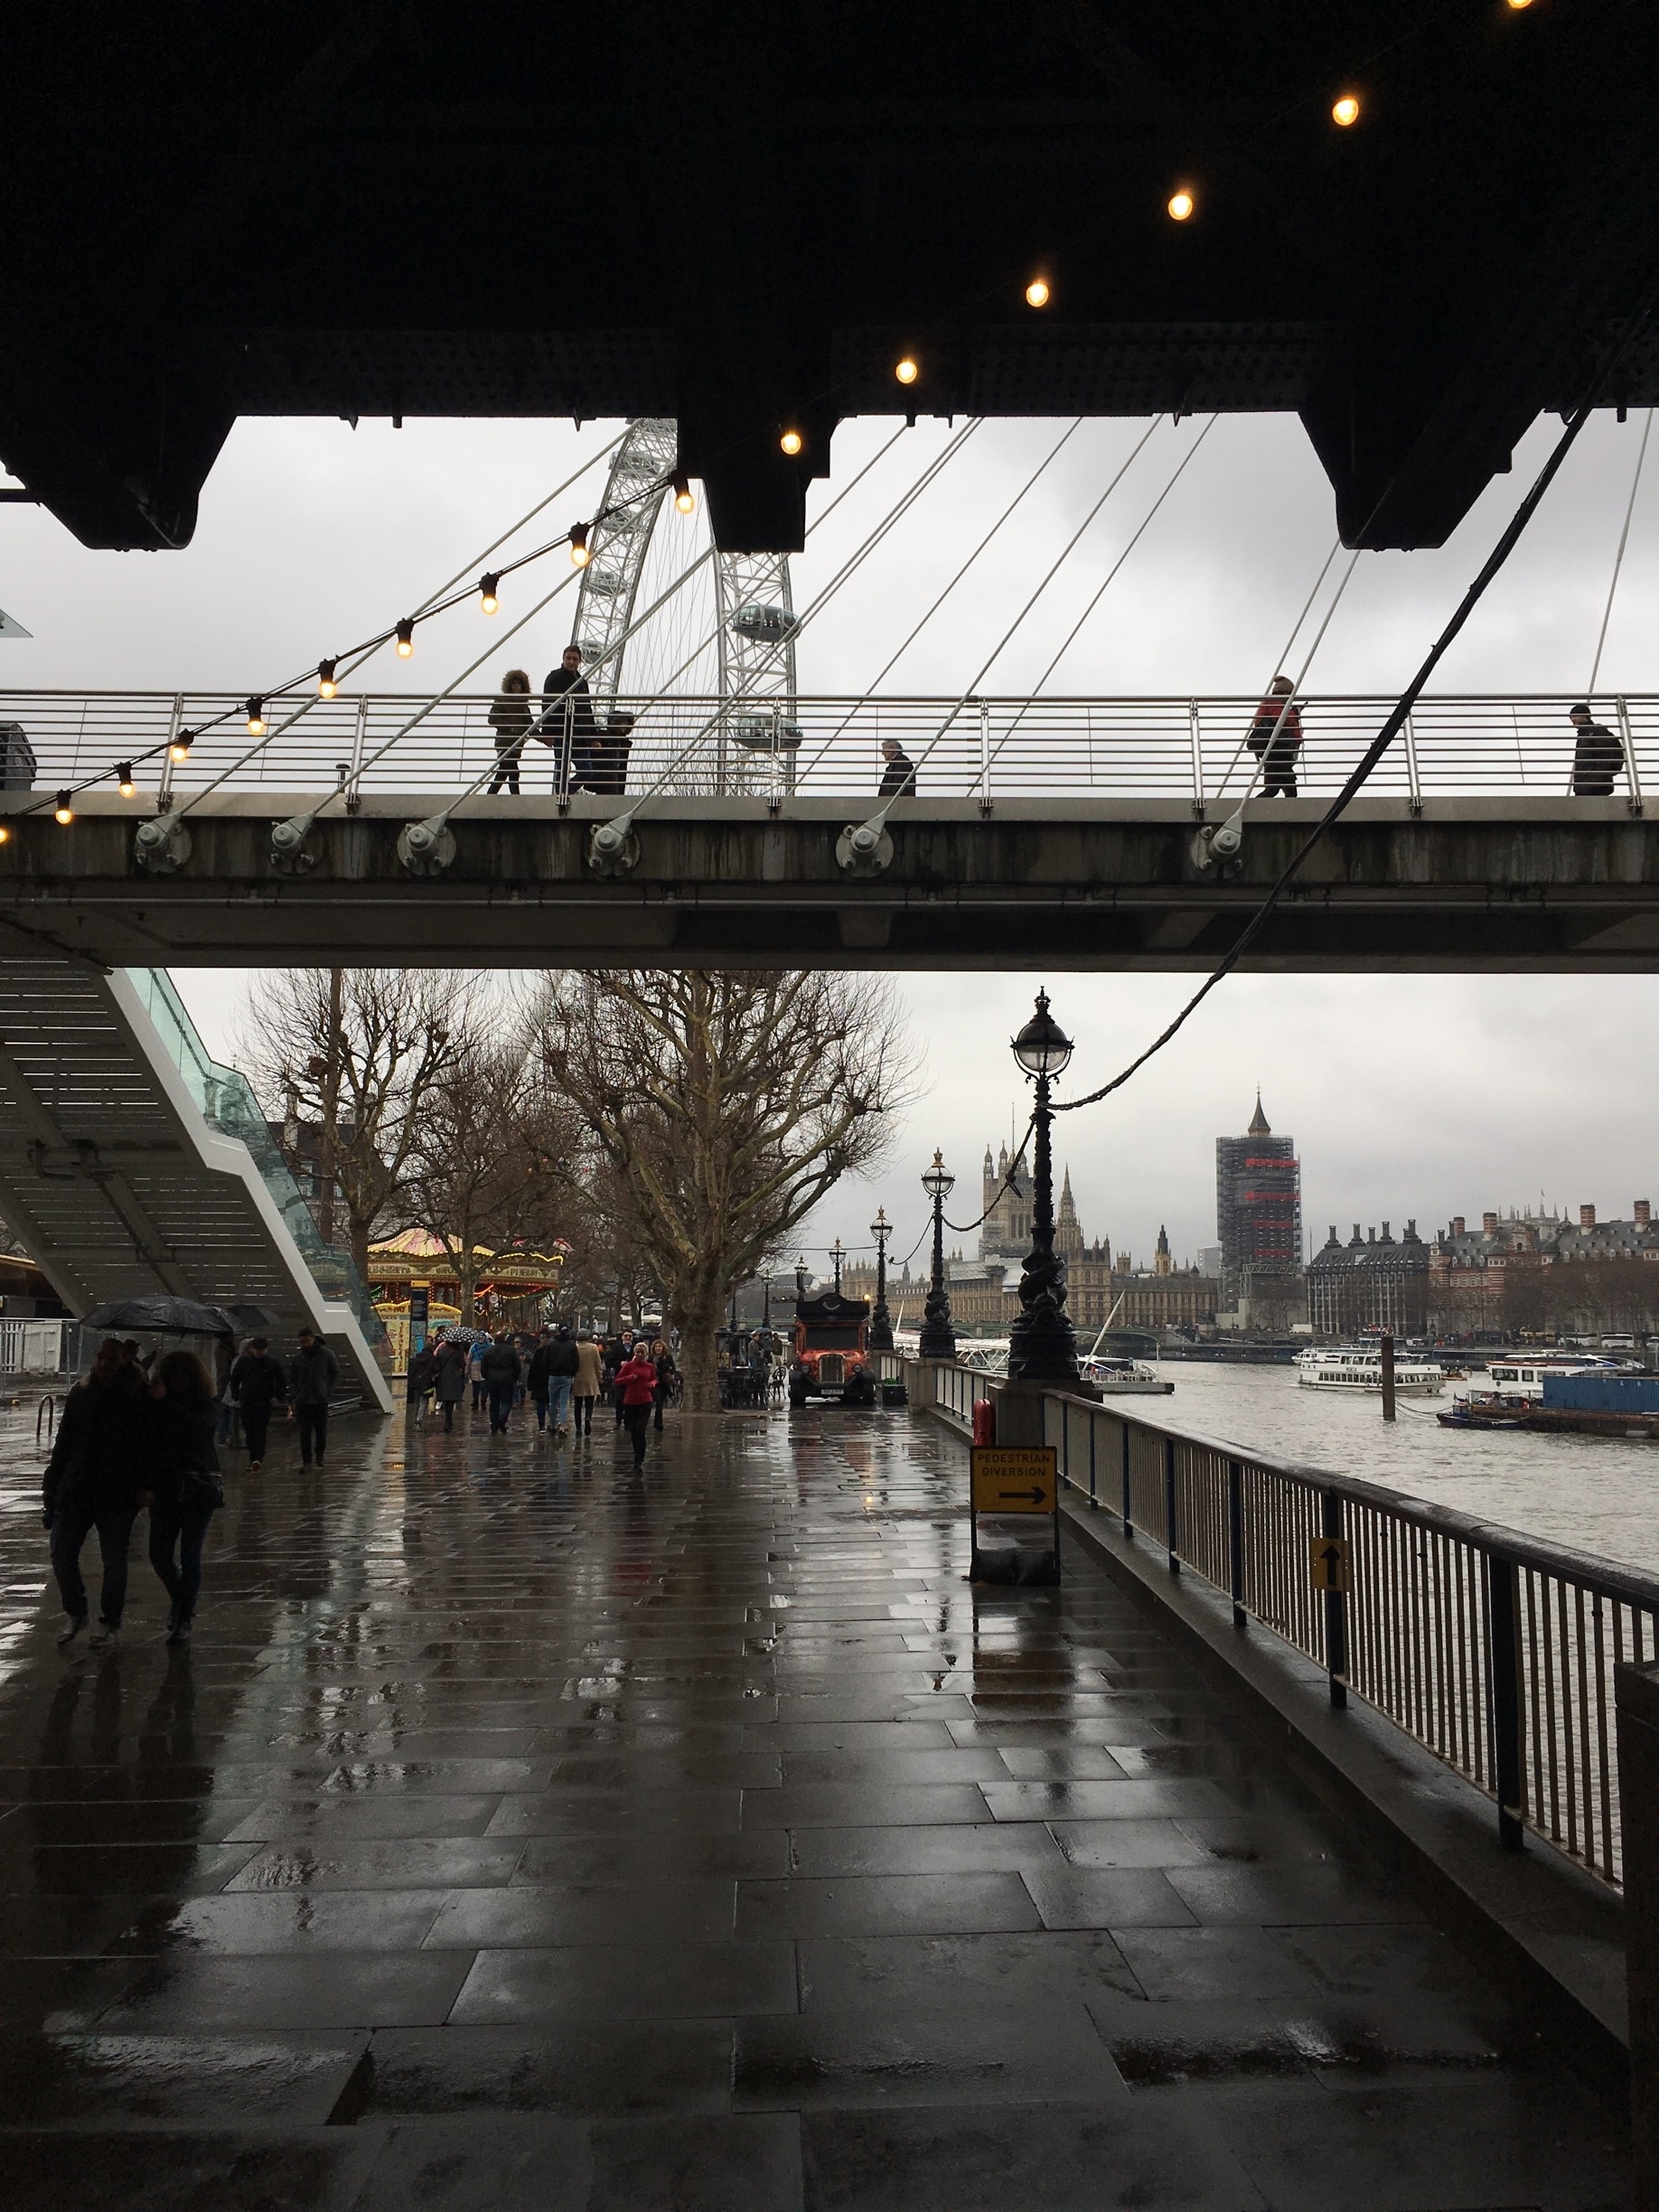 Rainy London adjacent to the powerful Thames swirls! 